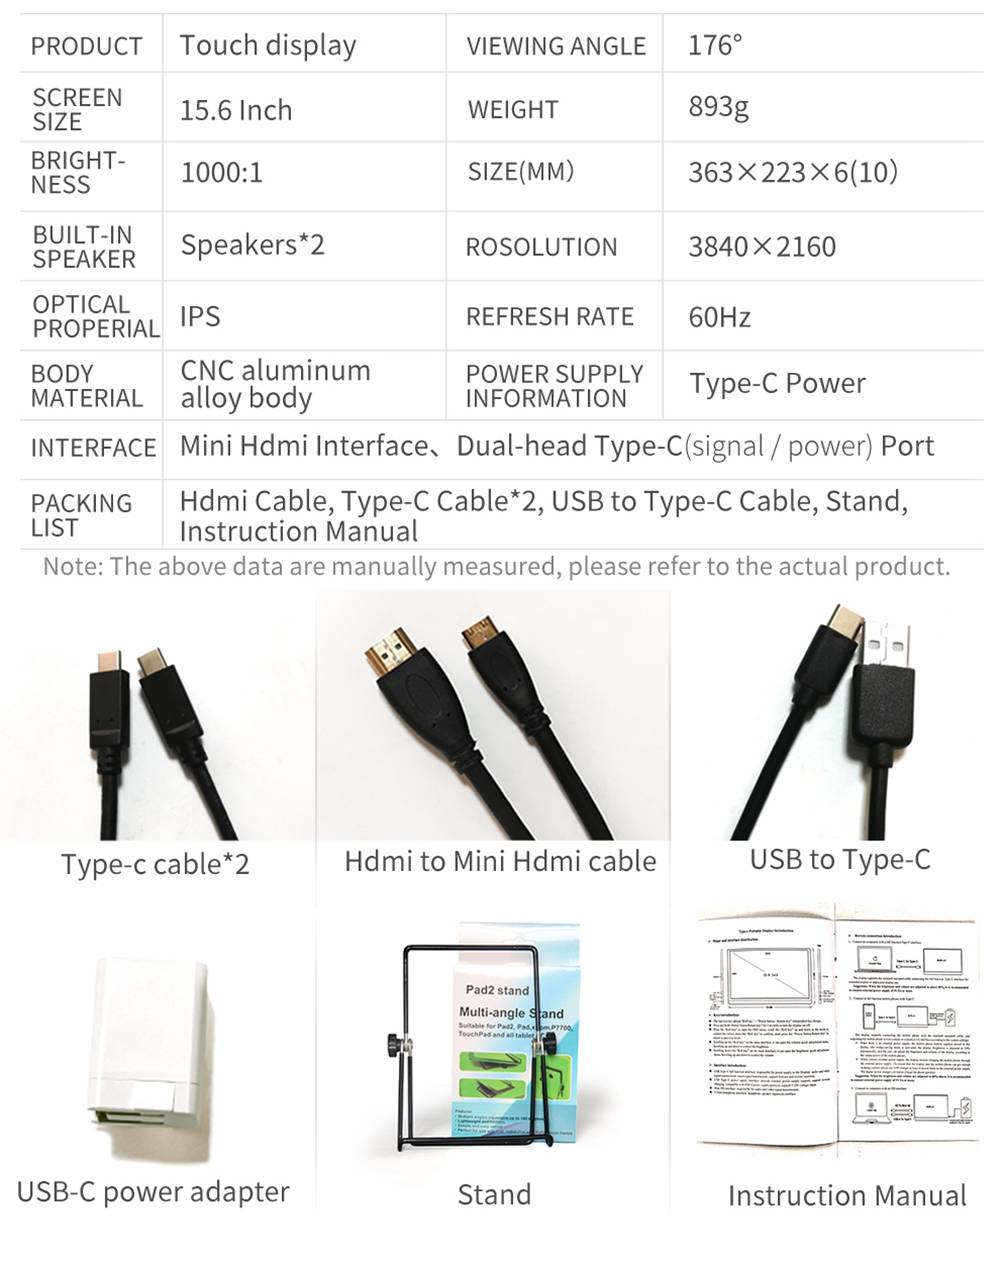 AOSIMAN ASM-156FC Portable Monitor 15.6 Inch IPS HDR Touch Screen 3840*2160 Resolution Full Metal Body Type-C+Mini HDMI Dual Port - Black